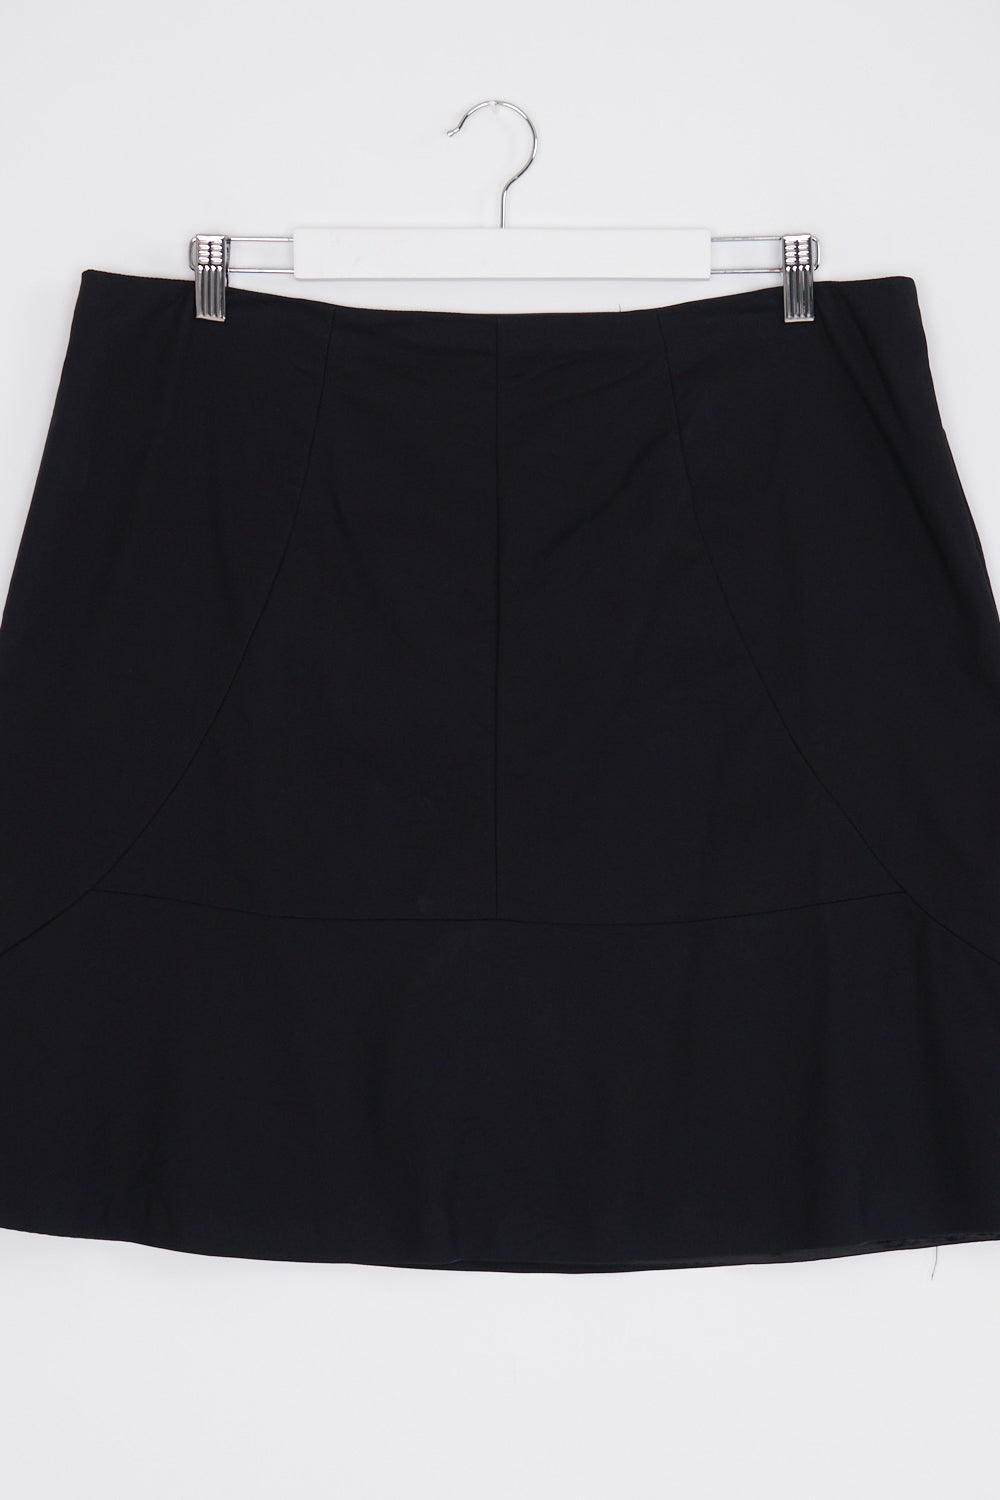 Veronika Maine Black Mini Skirt 16